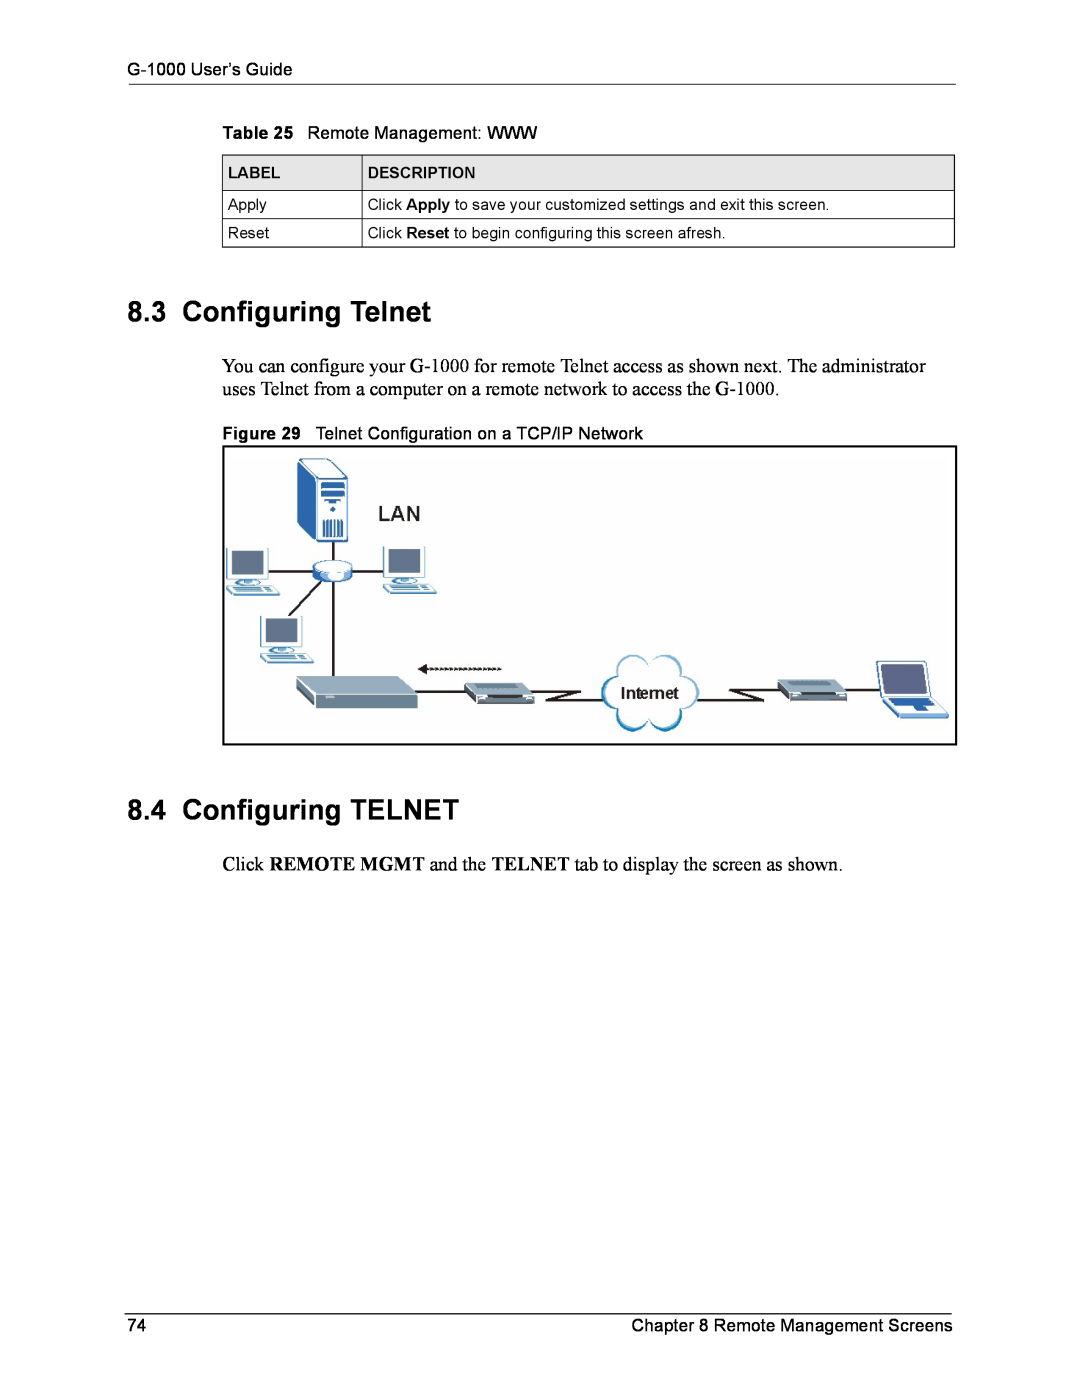 ZyXEL Communications G-1000 manual Configuring Telnet, Configuring TELNET 